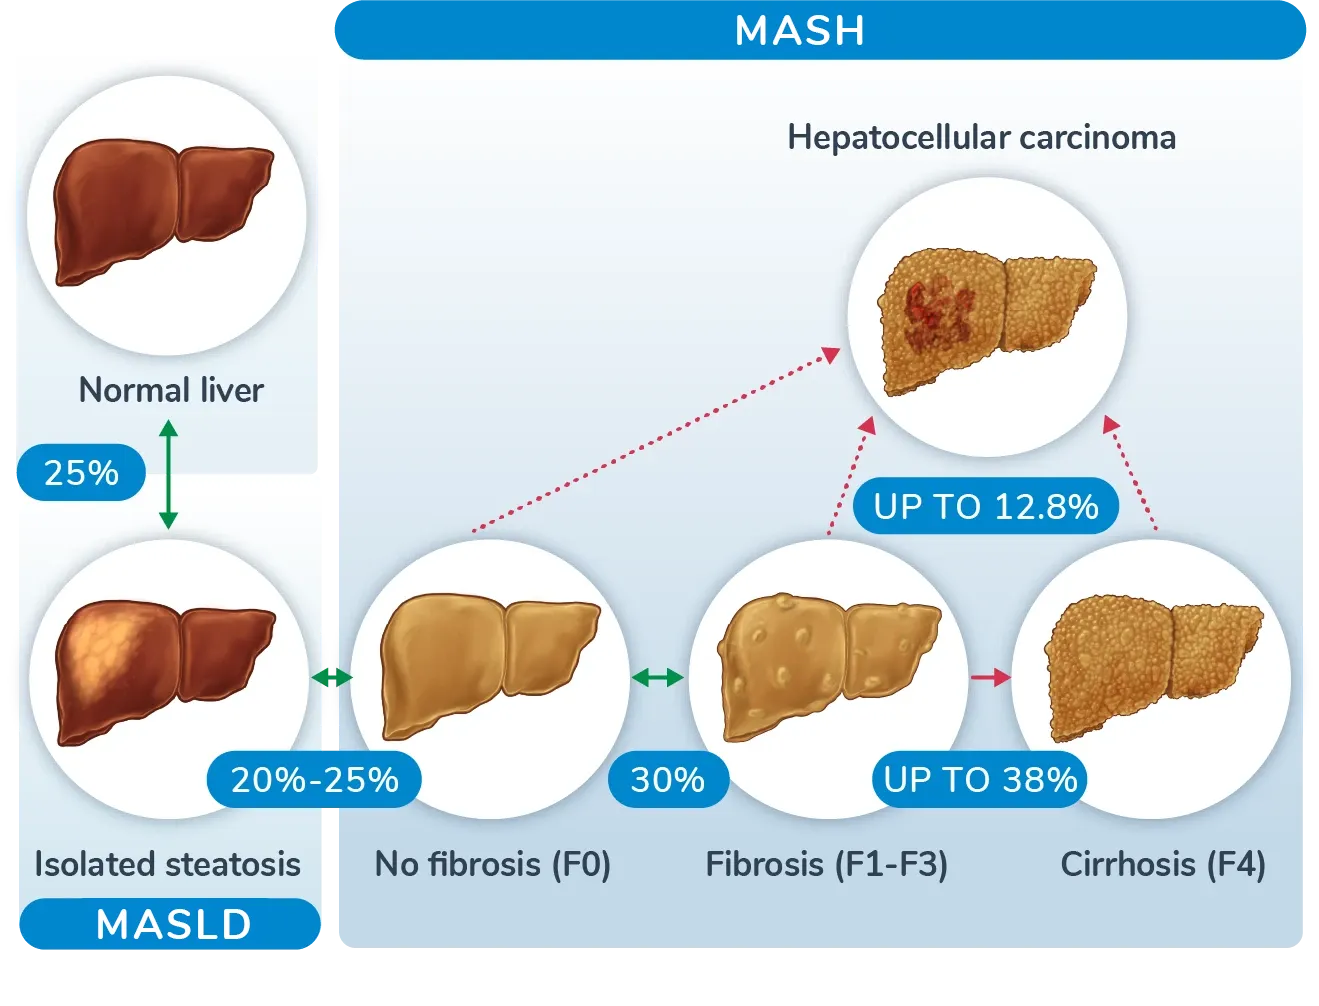 NASH-NAFLD - Nonalcoholic Steatohepatitis and fatty liver disease